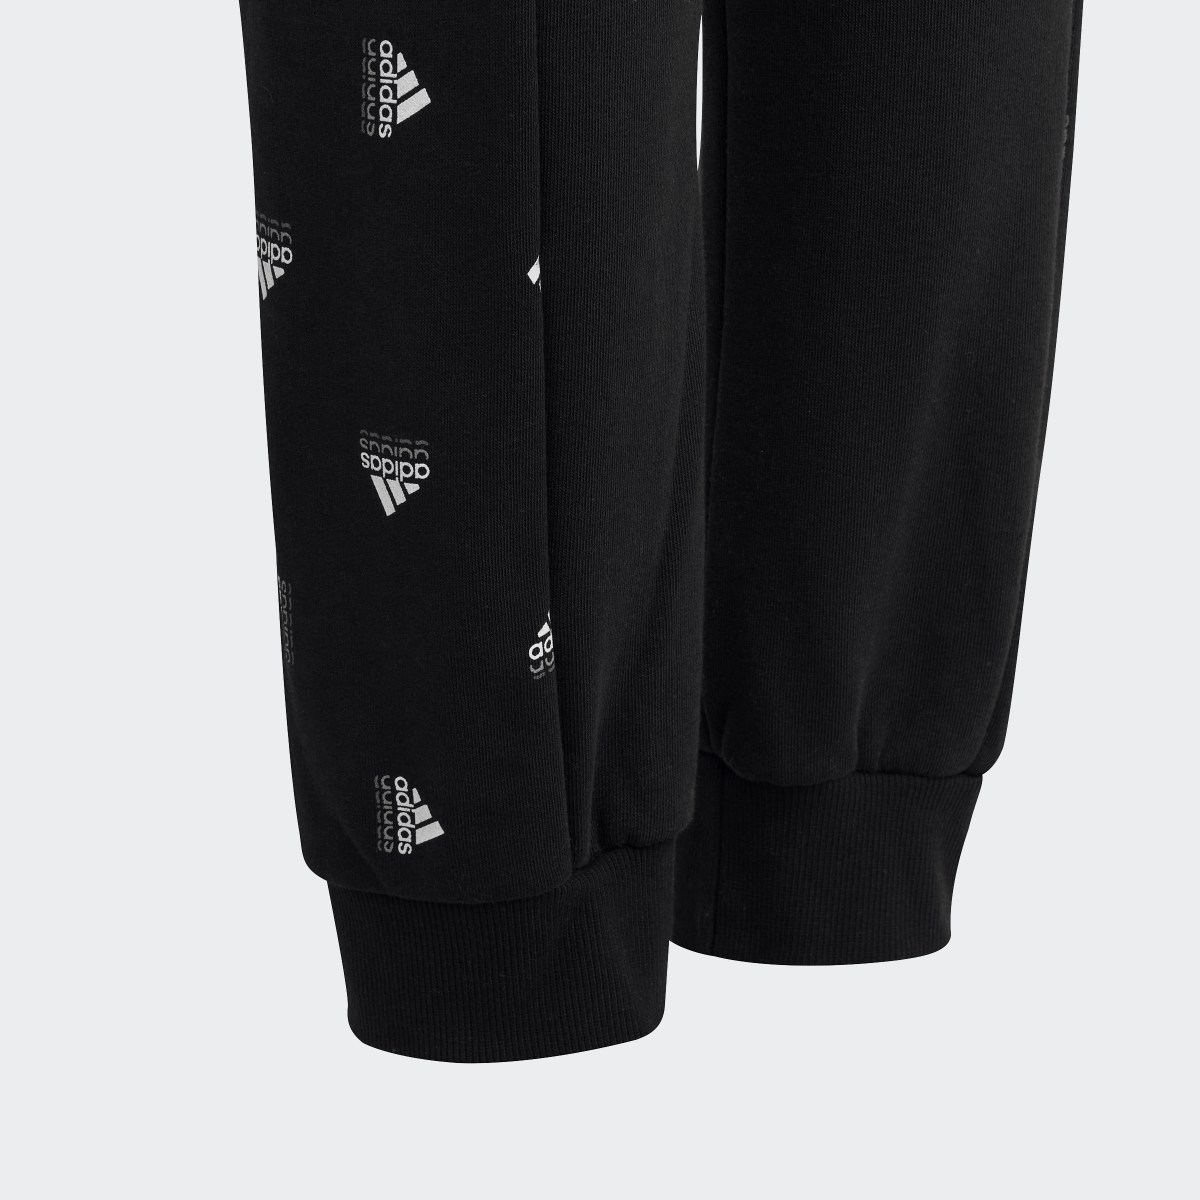 Adidas Brand Love Side Insert Print Pants. 7